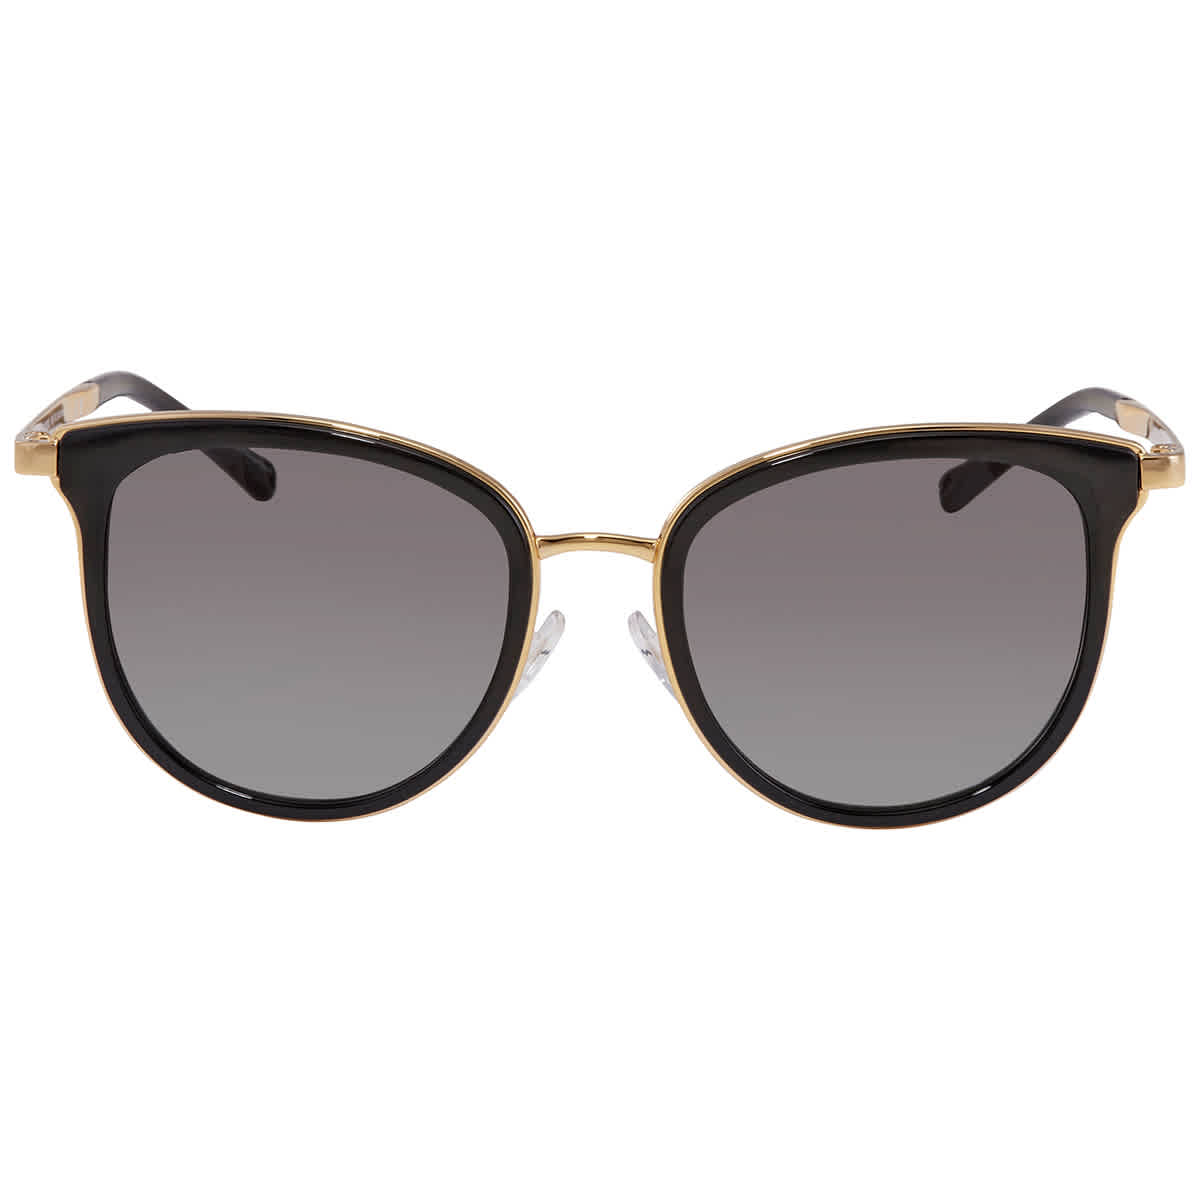 Sunglasses Michael Kors MK 1010 110011 Black/Gold - image 1 of 3